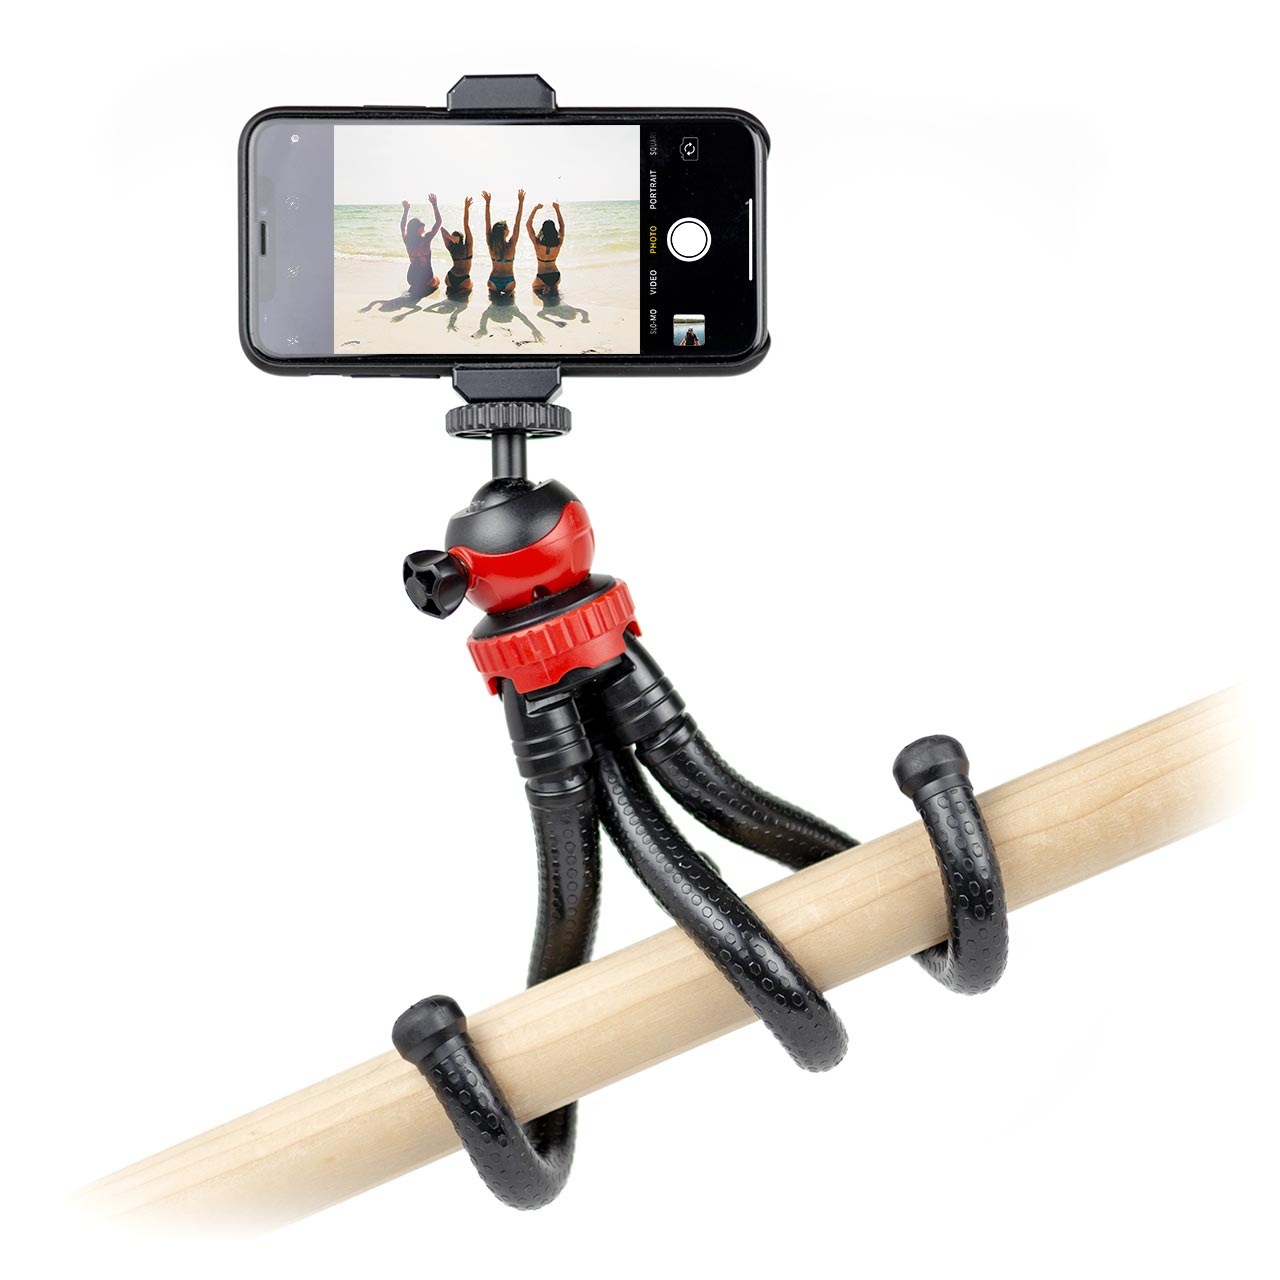 Flexible Tripod with Phone Mount